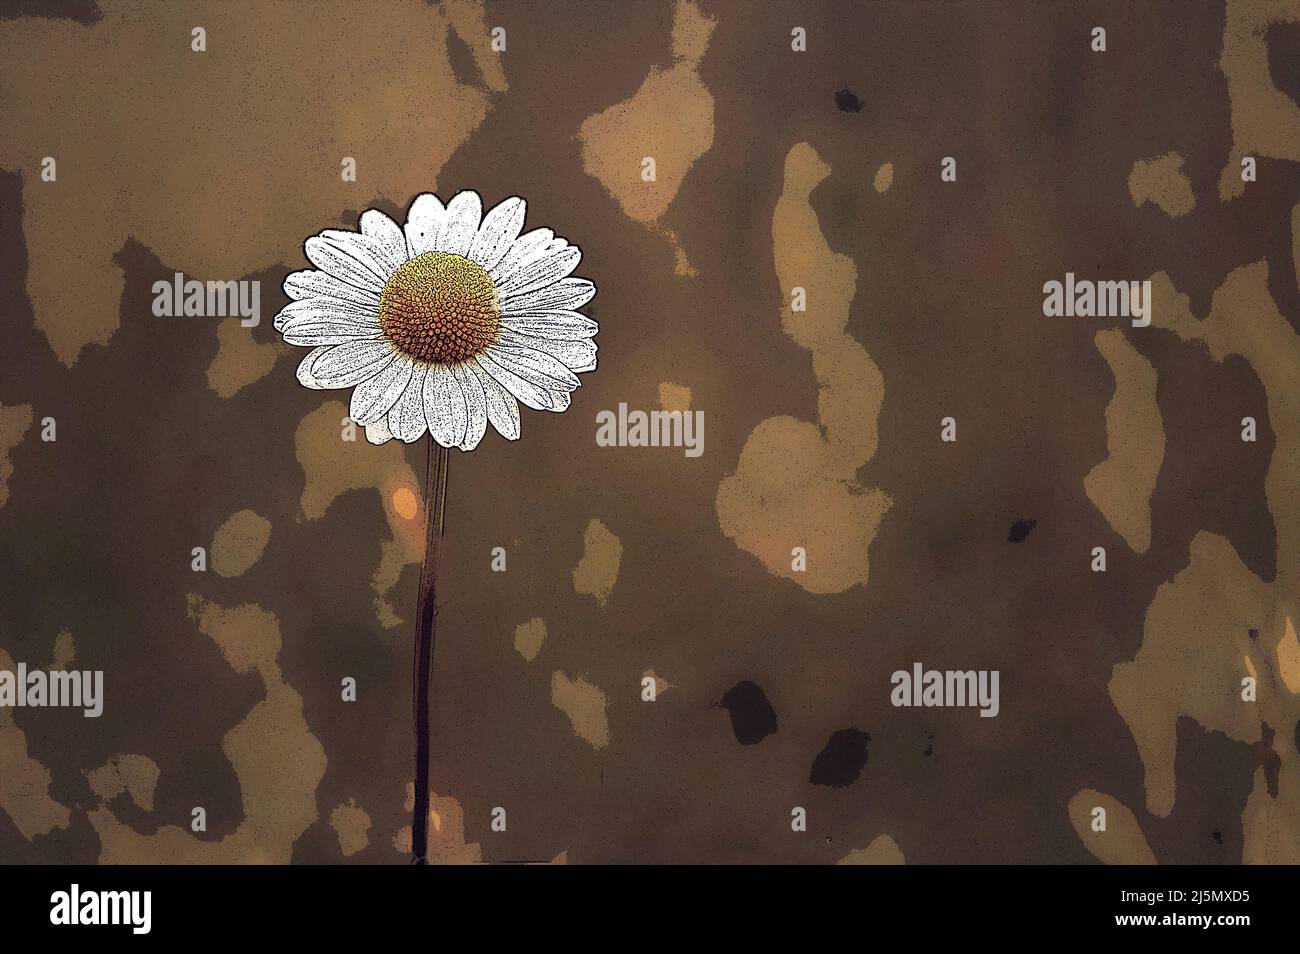 Daisy flower illustration on brown background Stock Photo